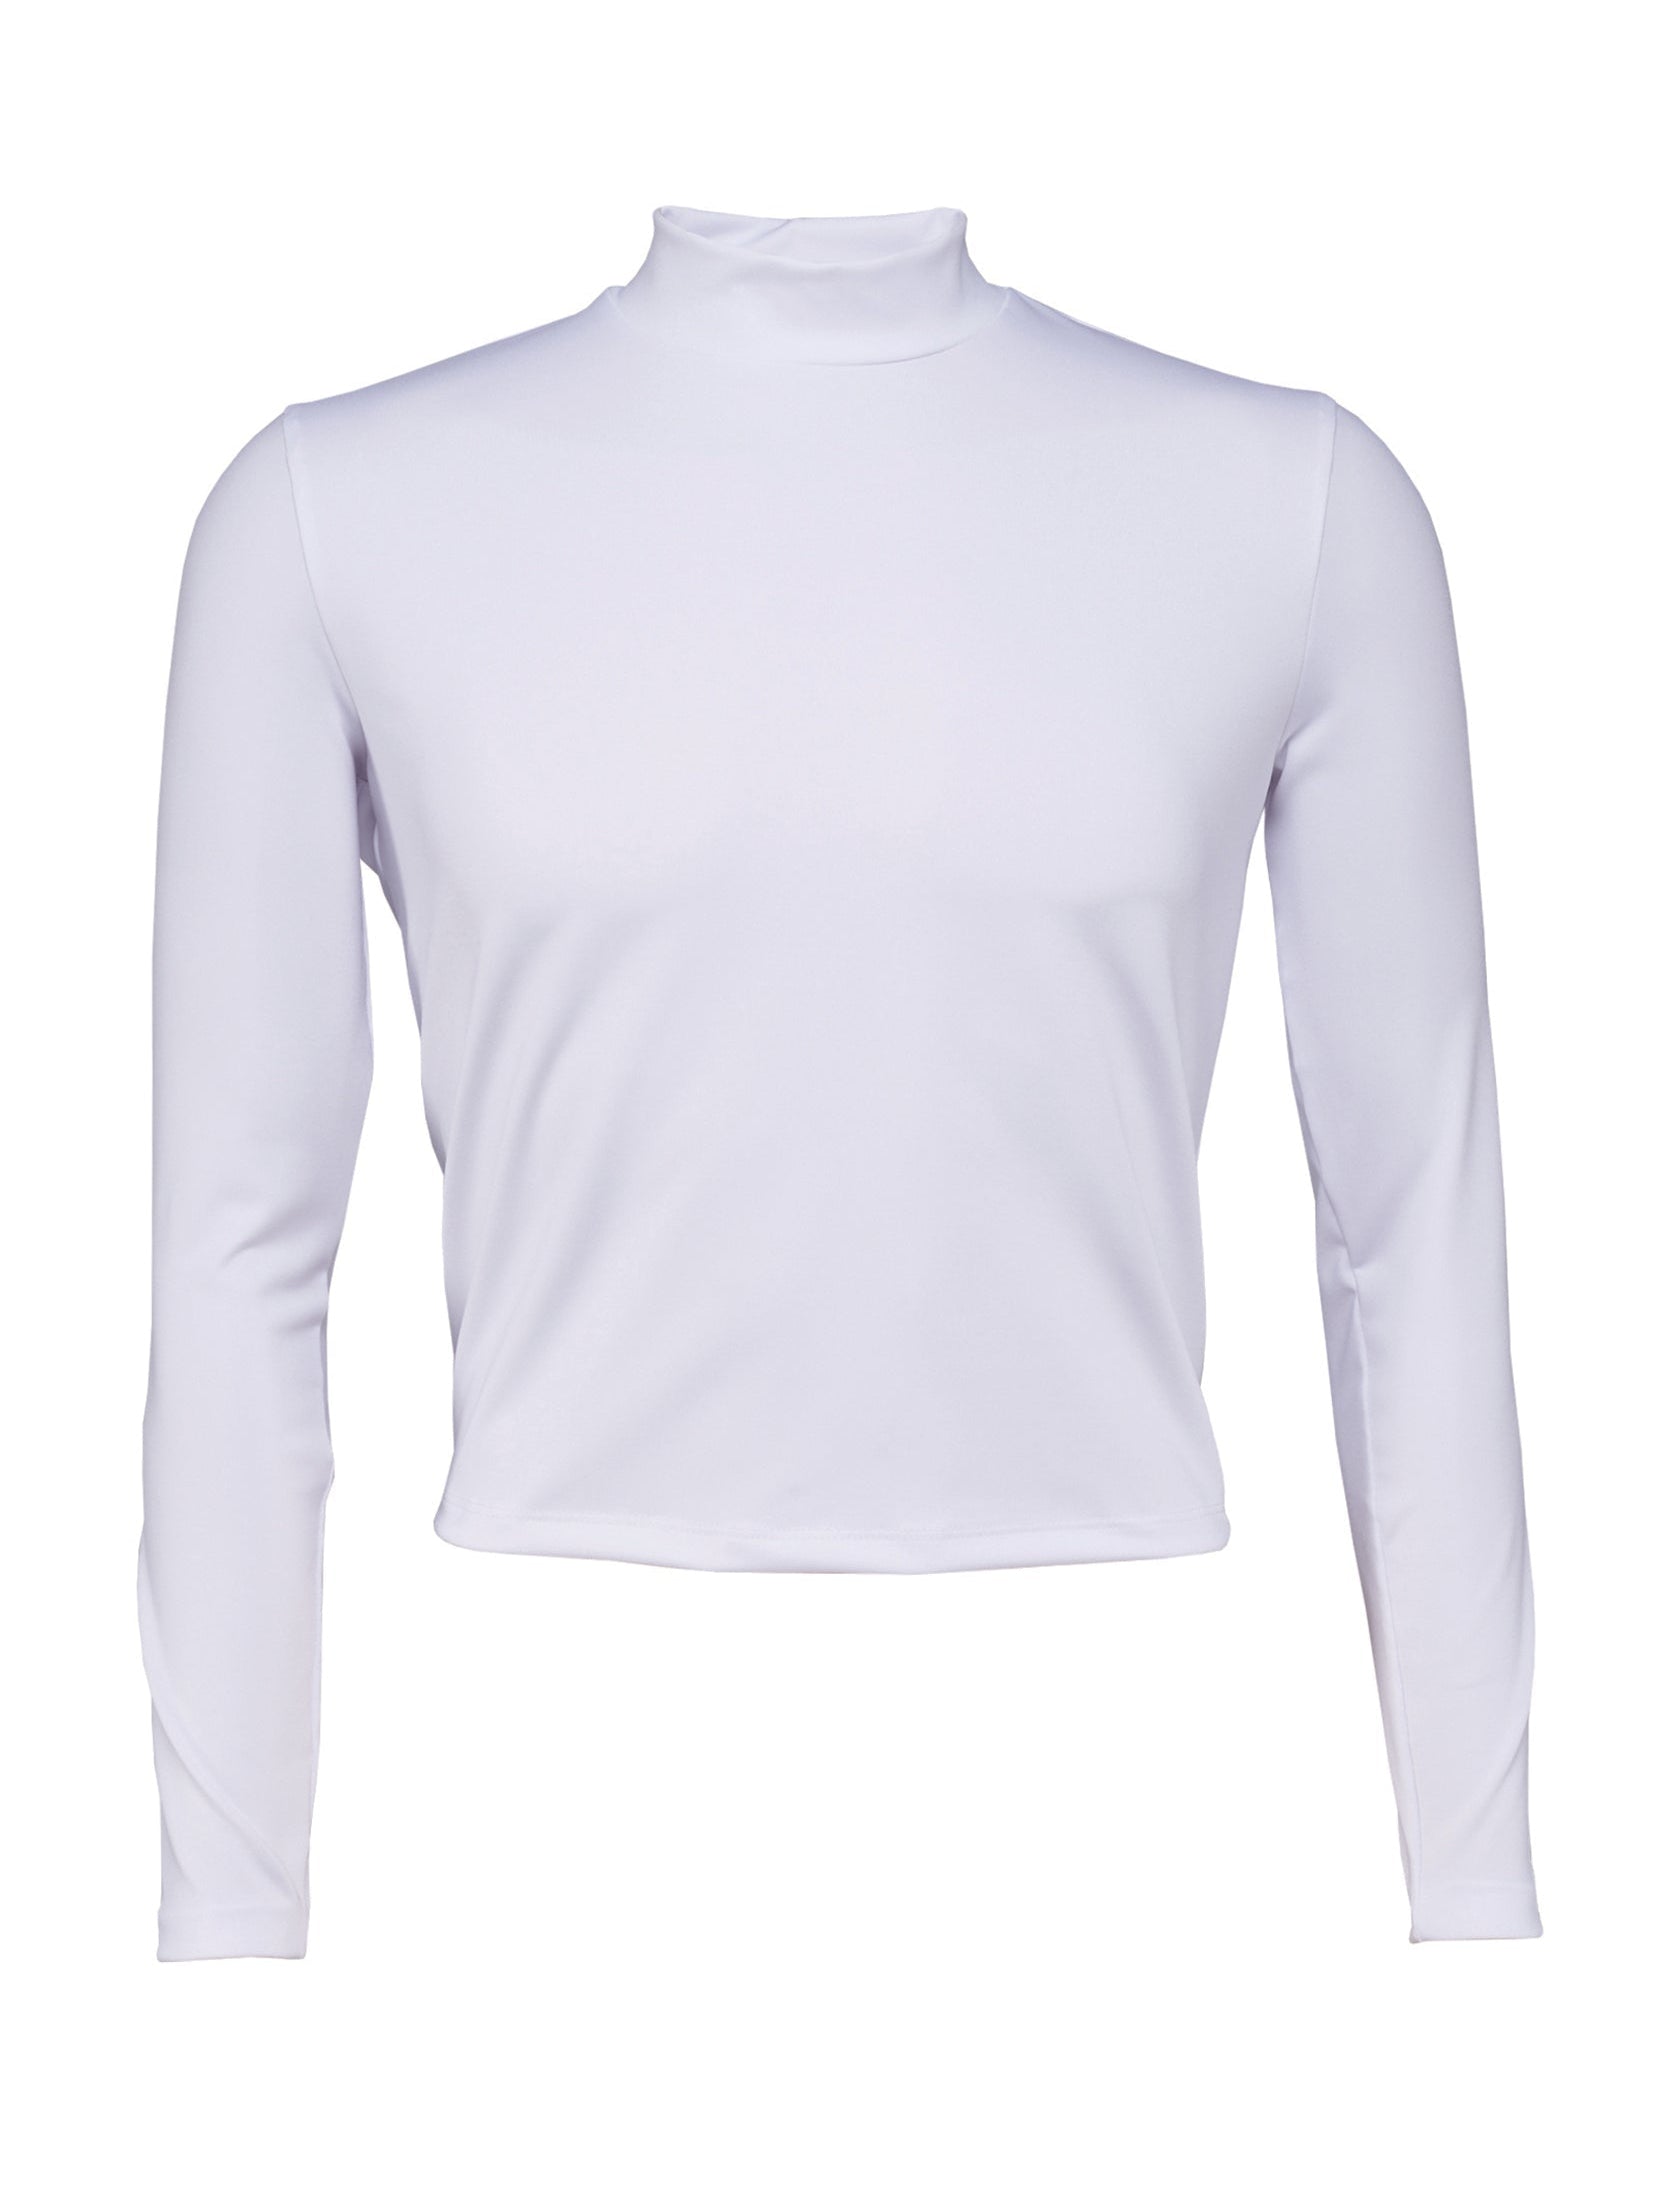 MB602 - Shift - Waist Length Dye Sublimated Shirt